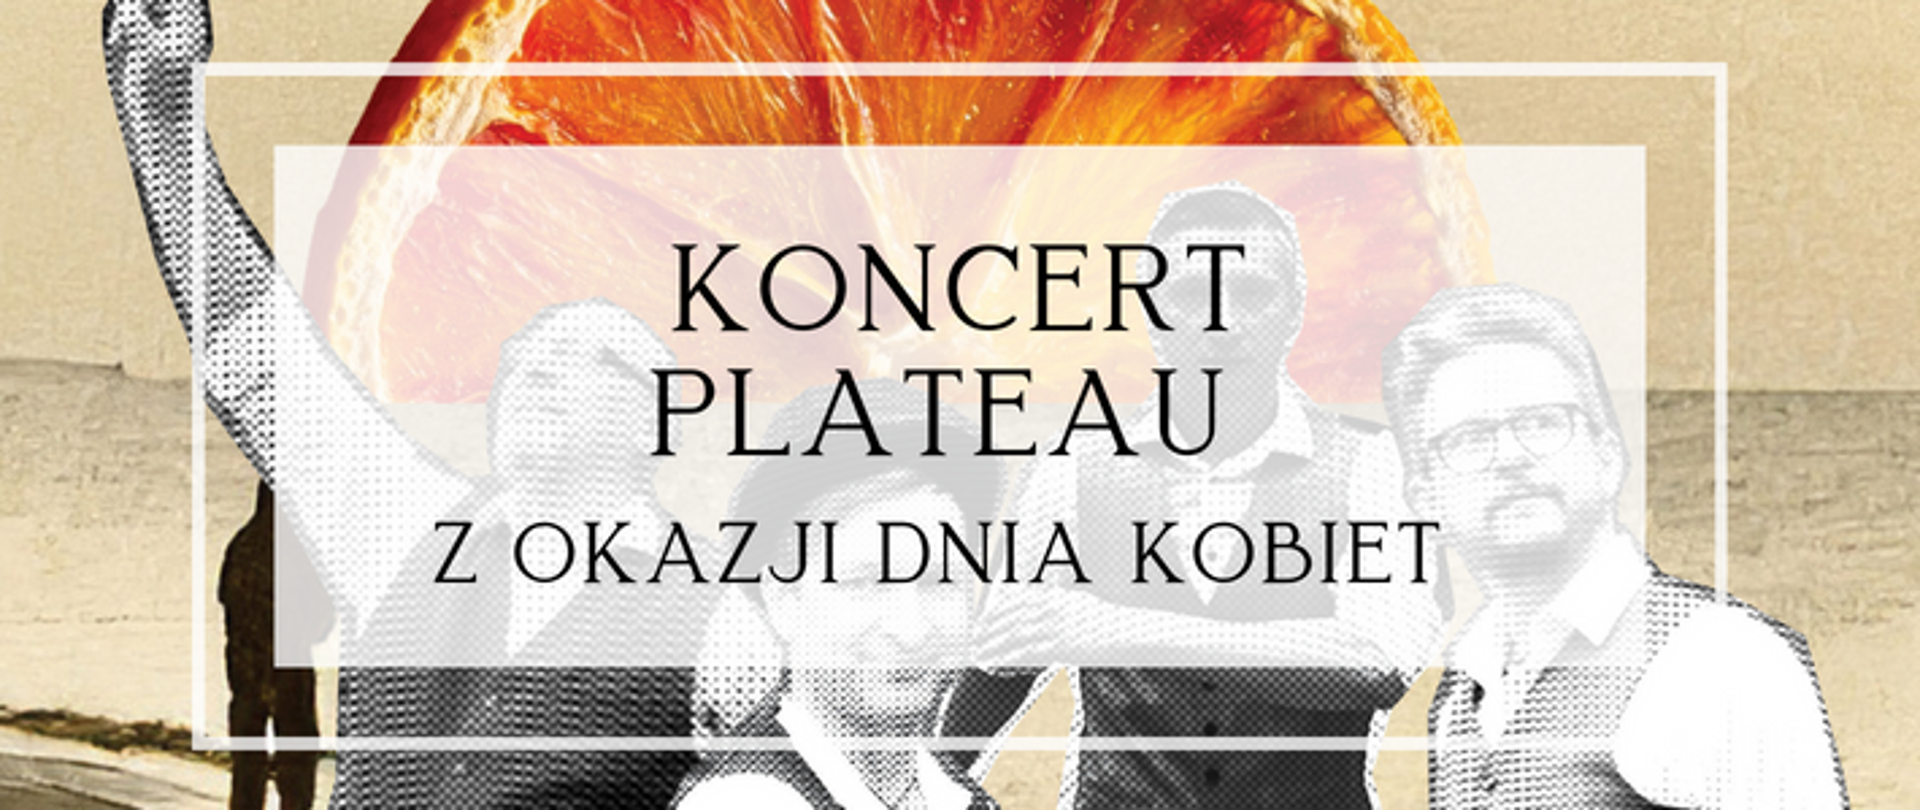 koncert plateau 2